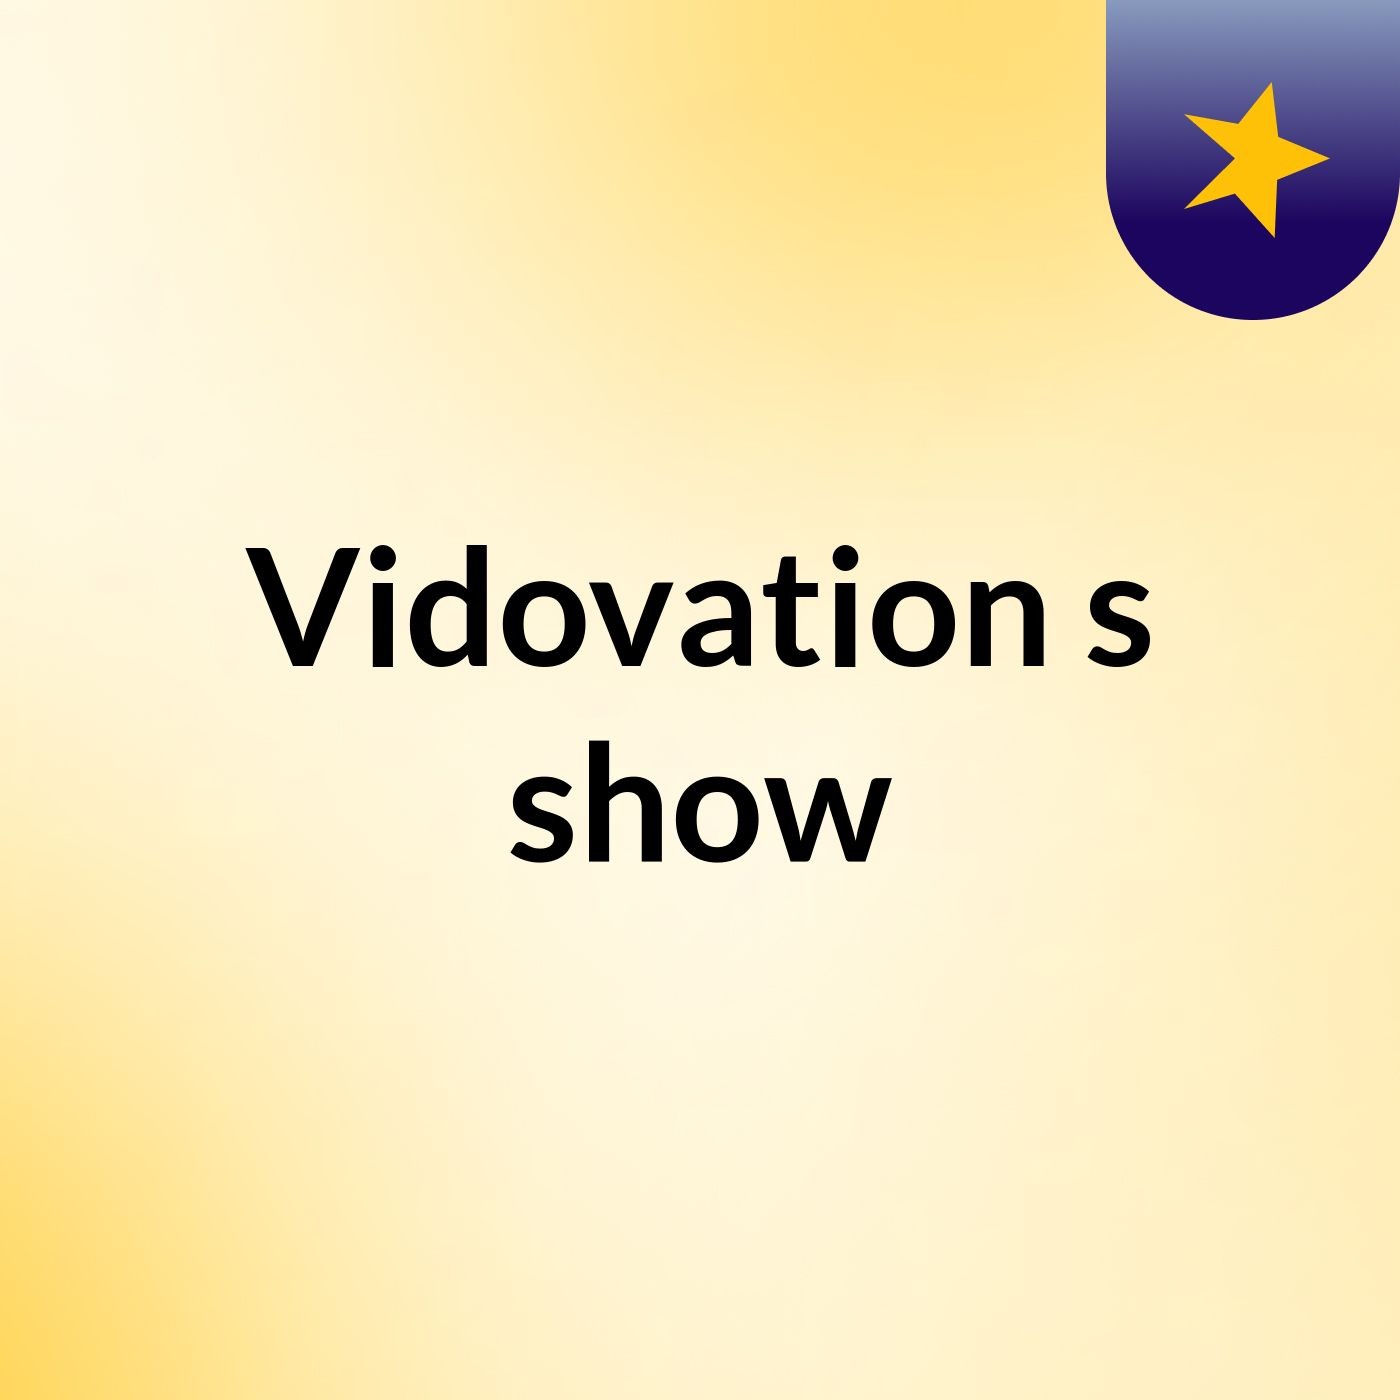 Vidovation's show